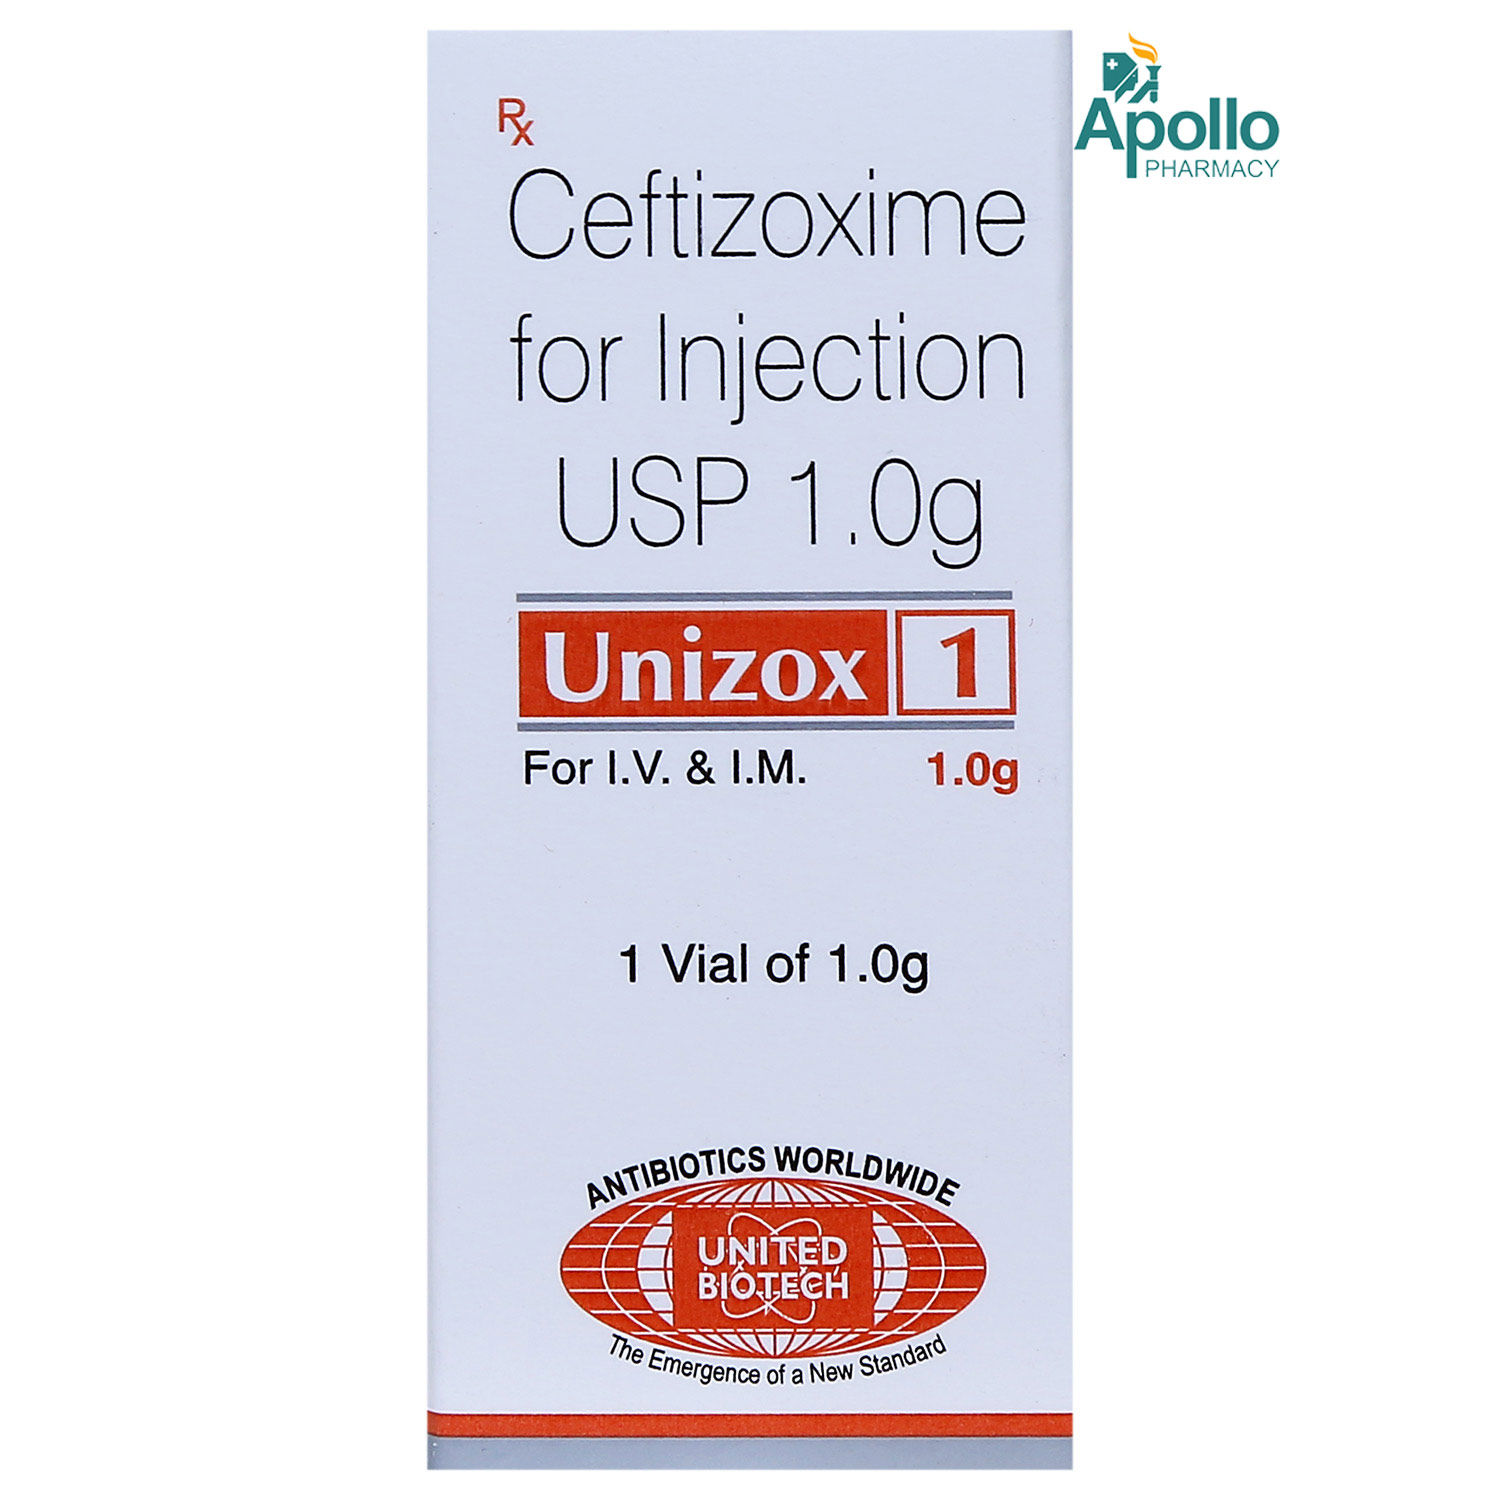 Buy Unizox Injection 1 gm Online